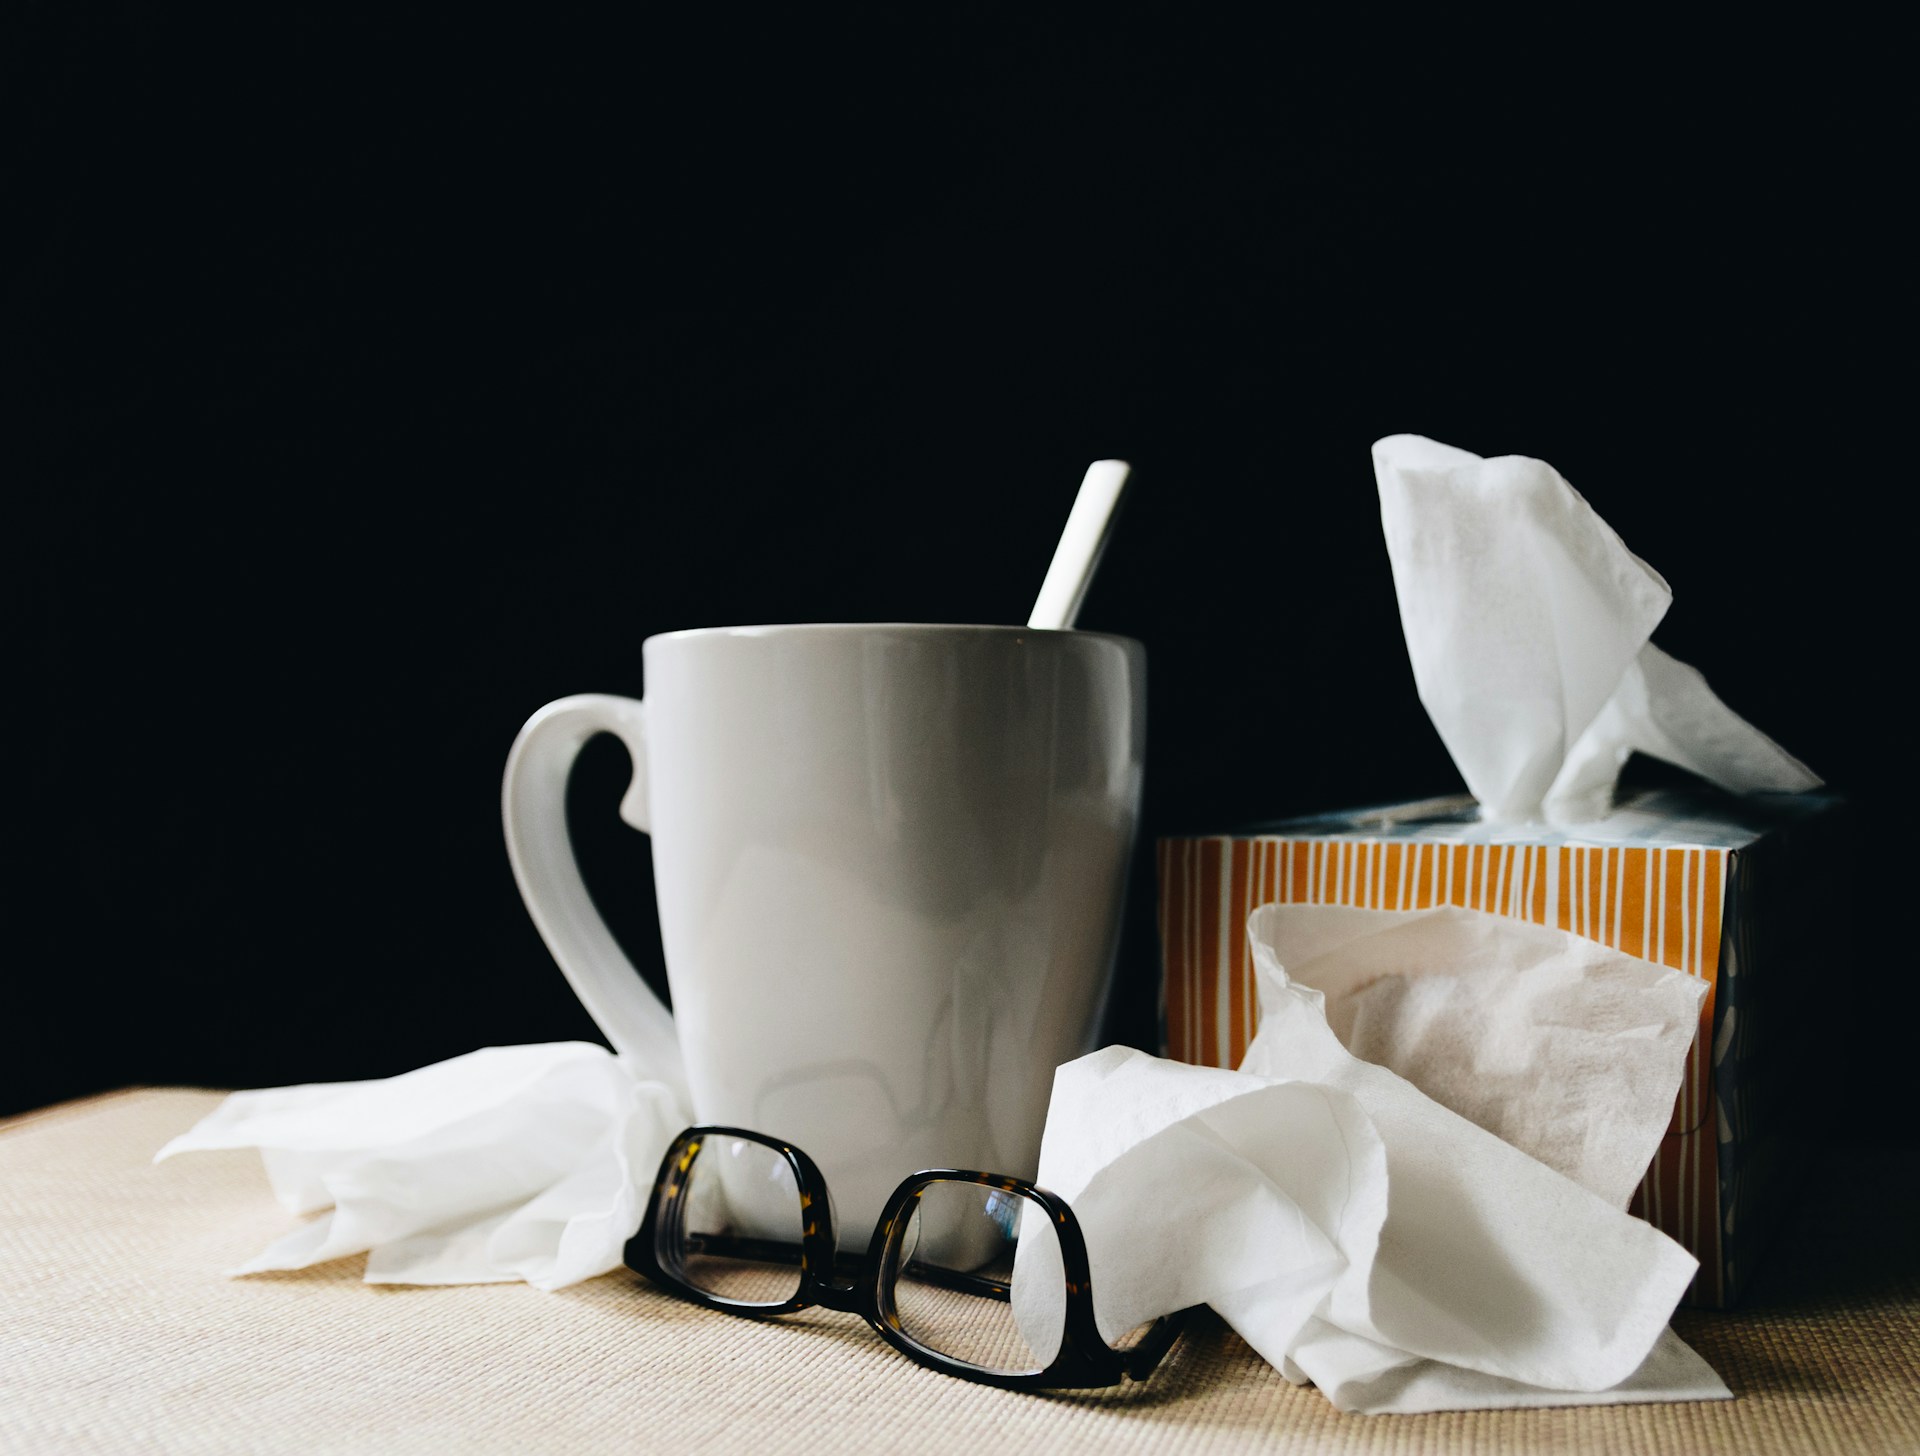 How long can flu symptoms persist?